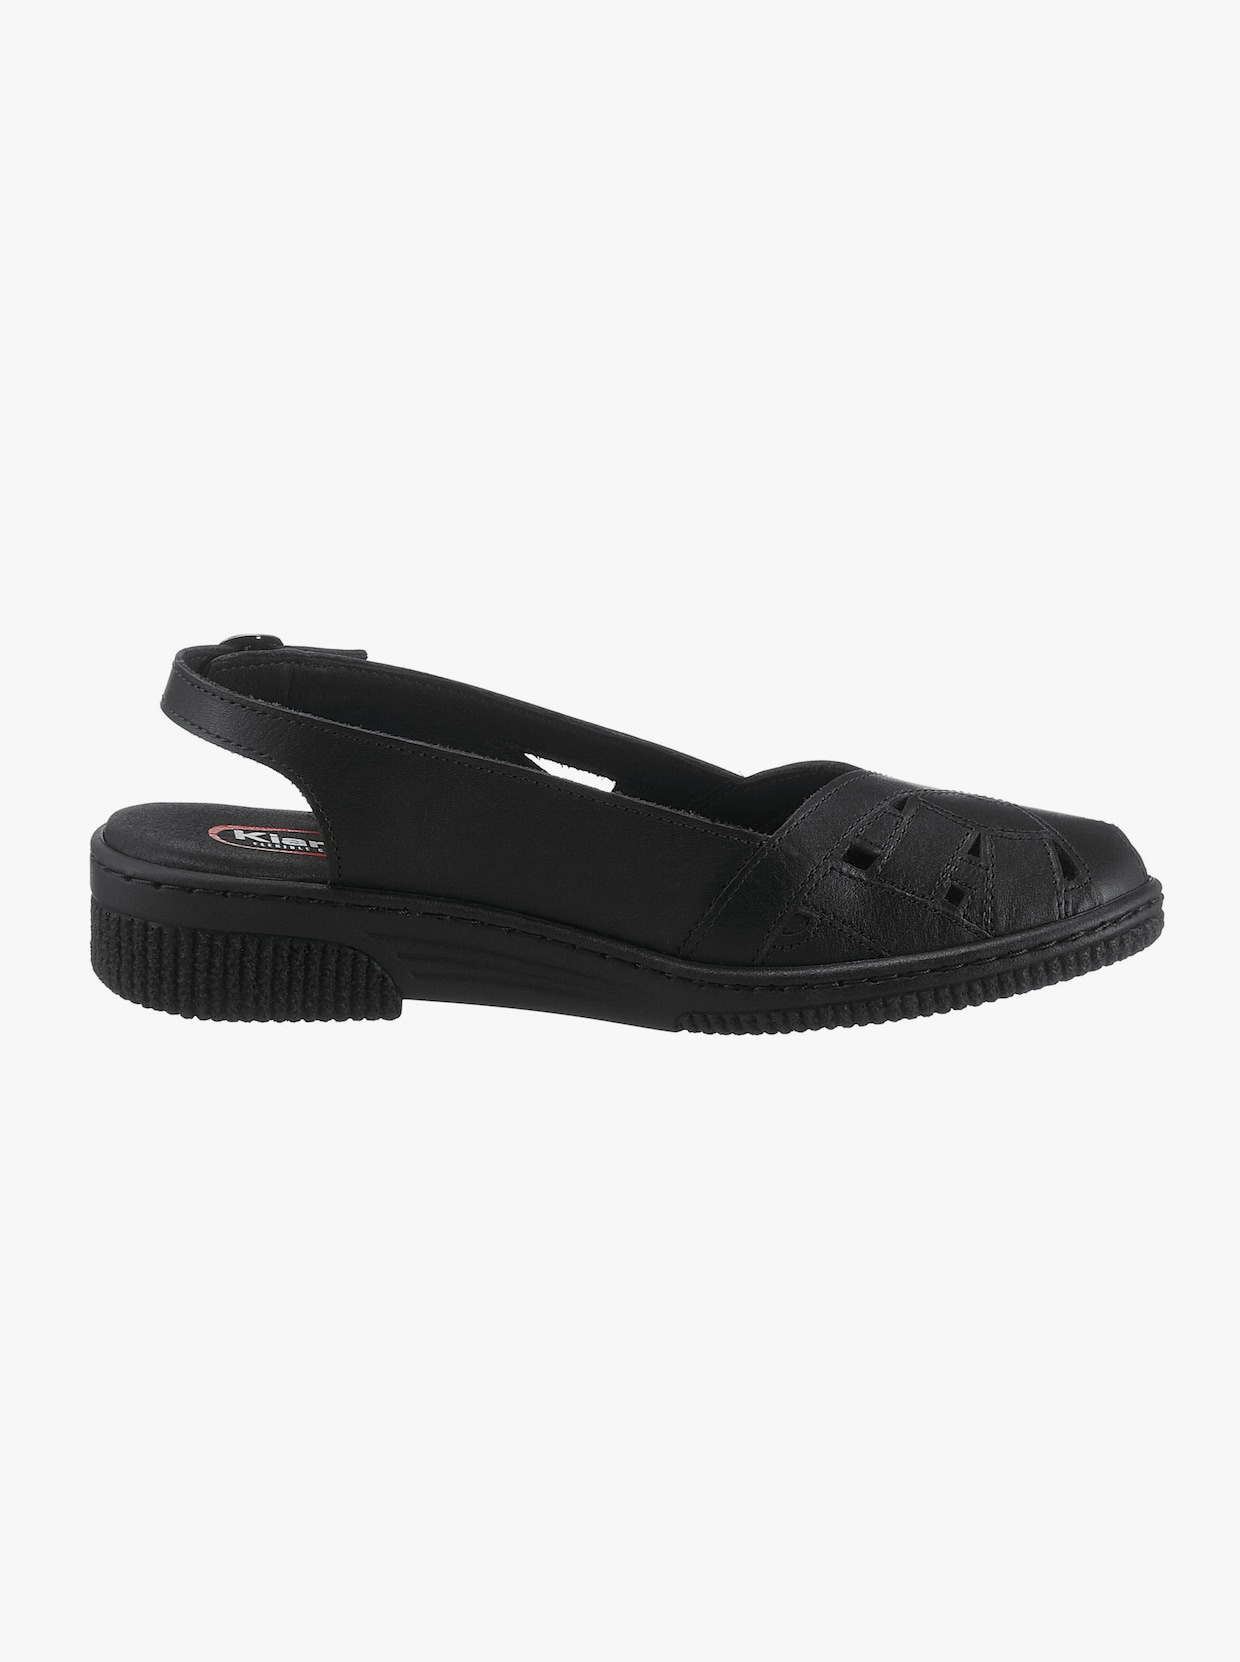 Kiarteflex Sandalette - schwarz